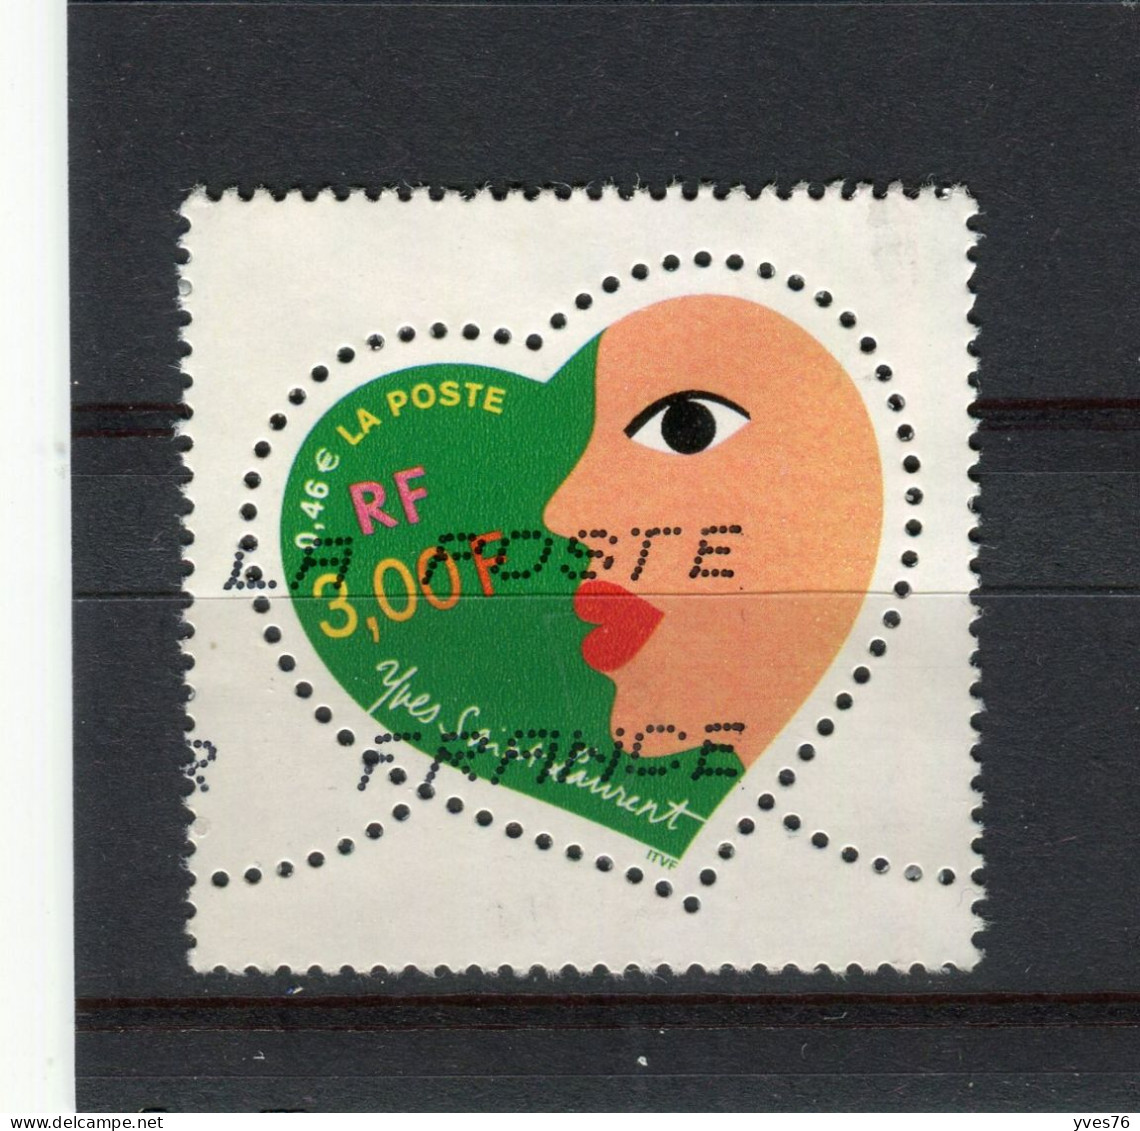 FRANCE - Y&T N° 3298° - Saint-Valentin - Yves Saint Laurent - Used Stamps